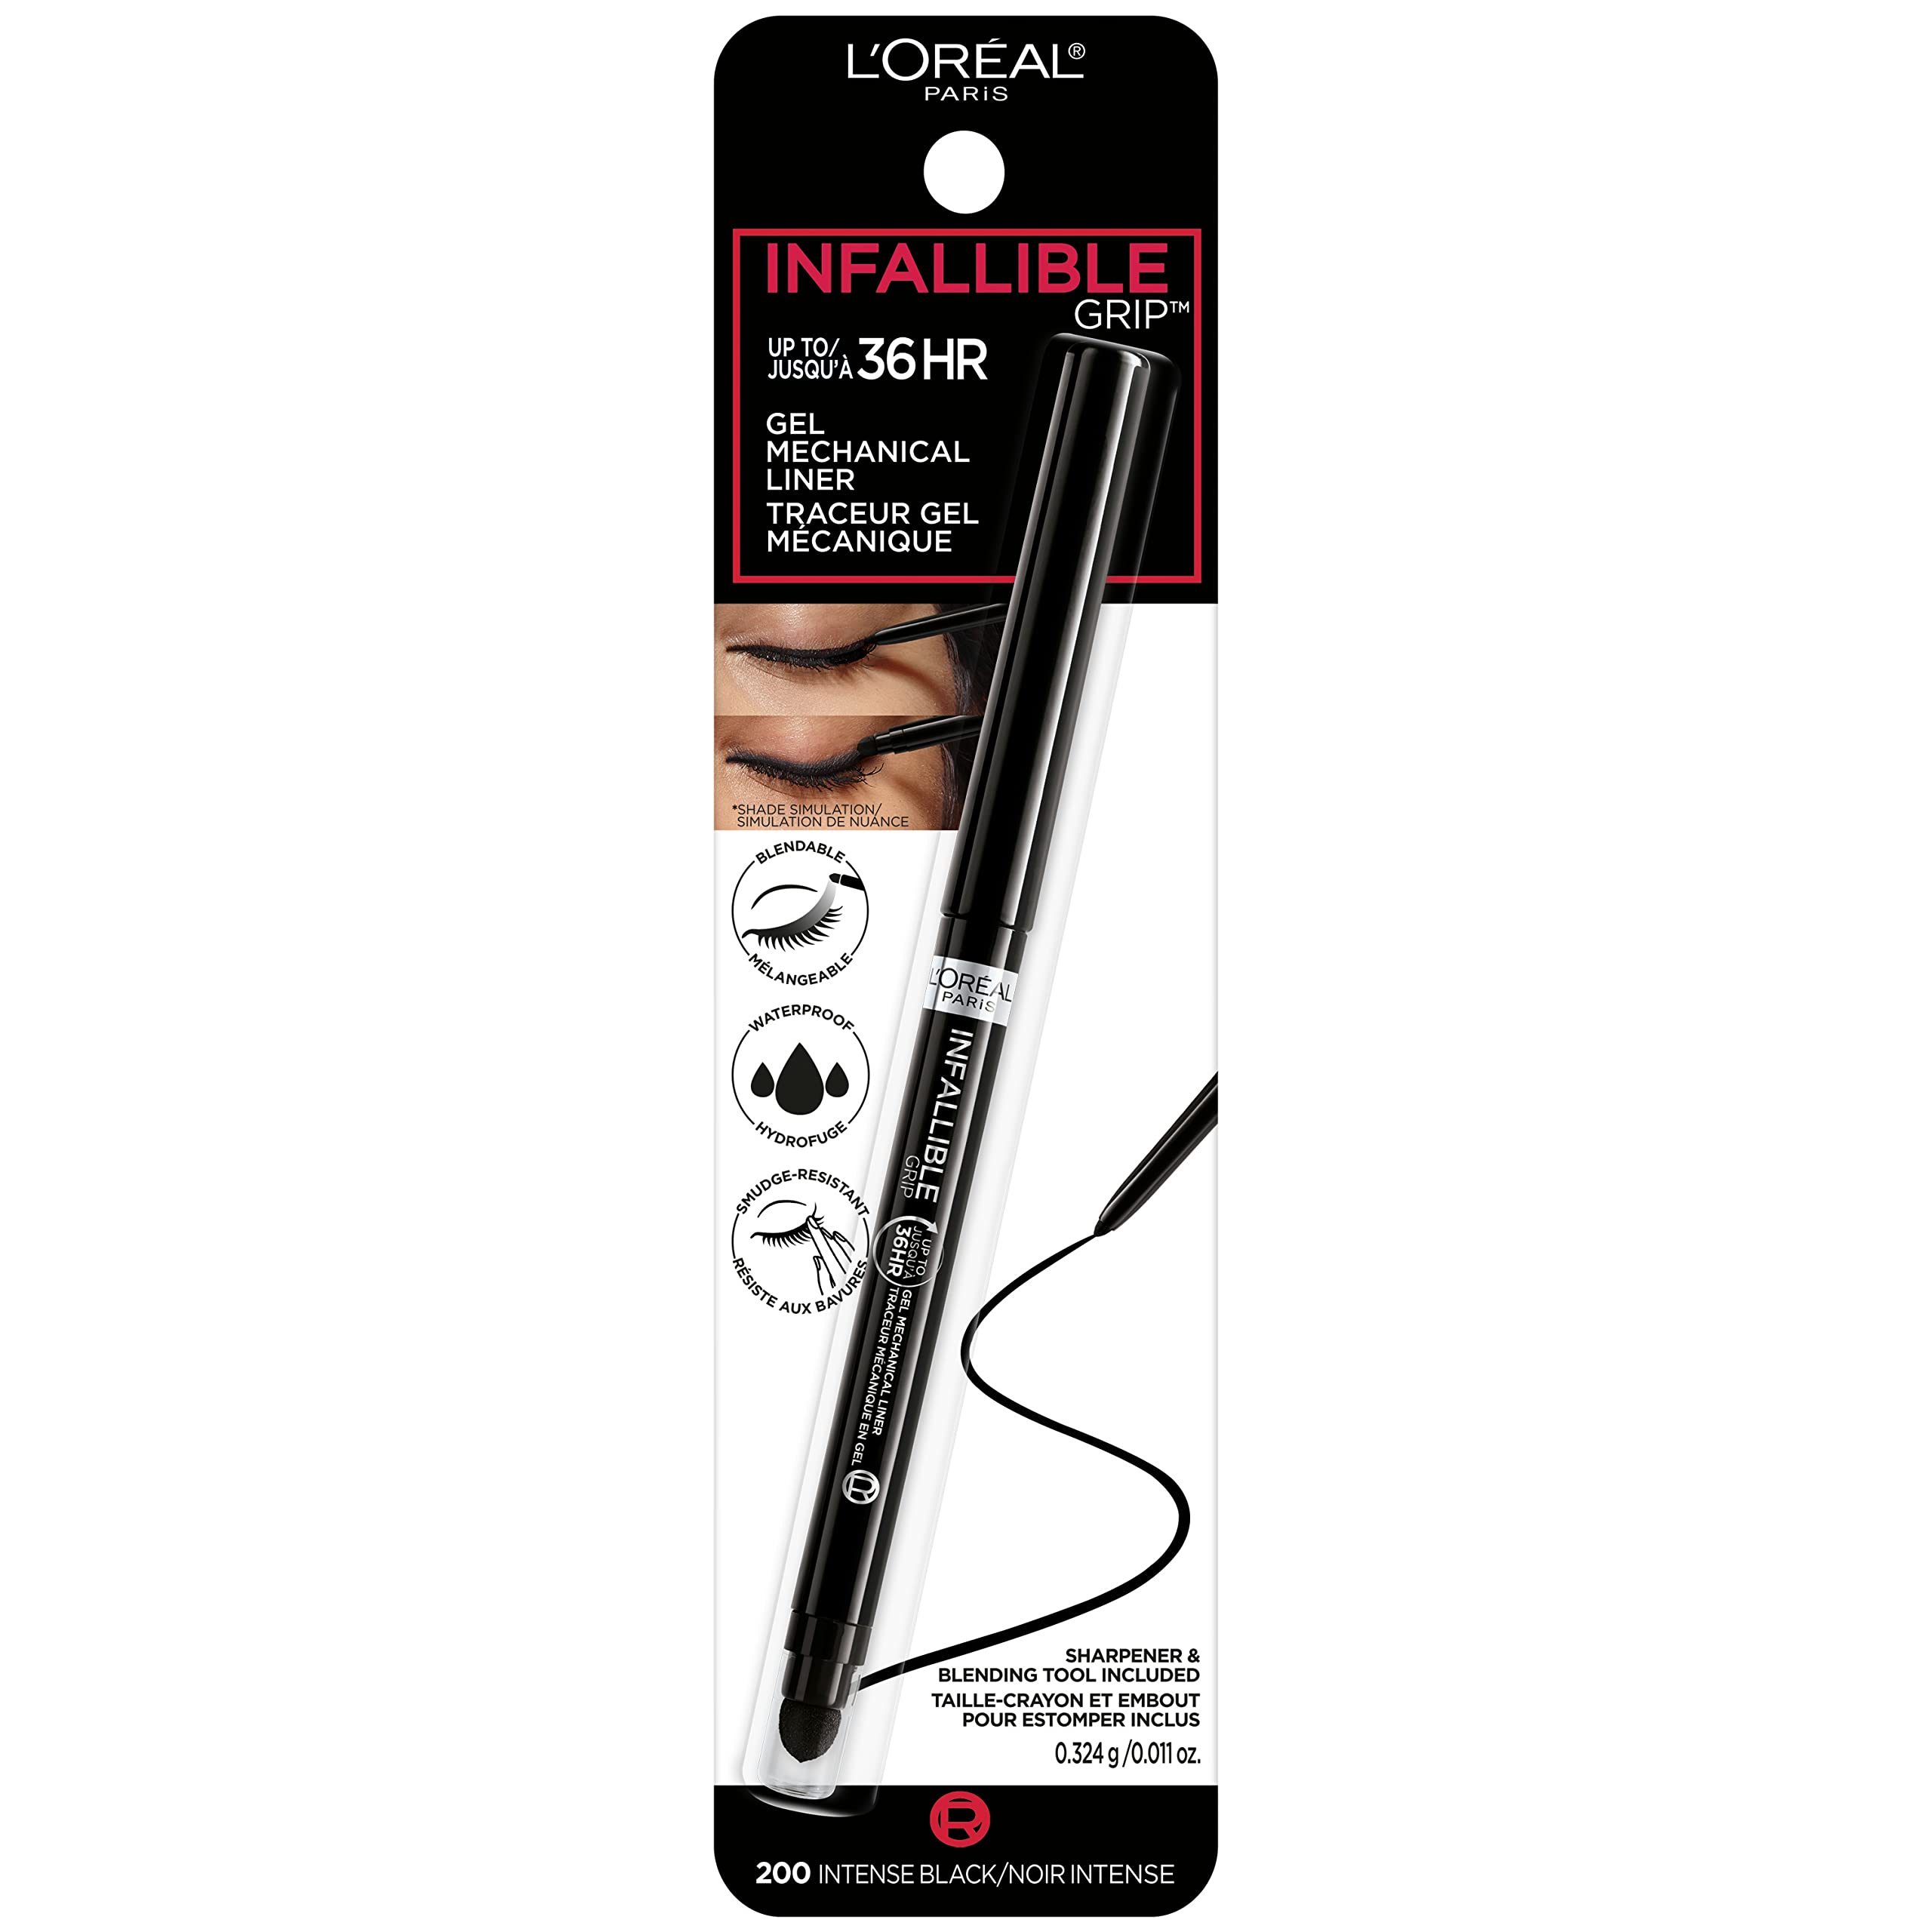 L’Oréal Paris Infallible Grip Mechanical Gel Eyeliner Pencil, Smudge-Resistant, Waterproof Eye Makeup with Up to 36HR Wear, Intense Black, 1 Kit